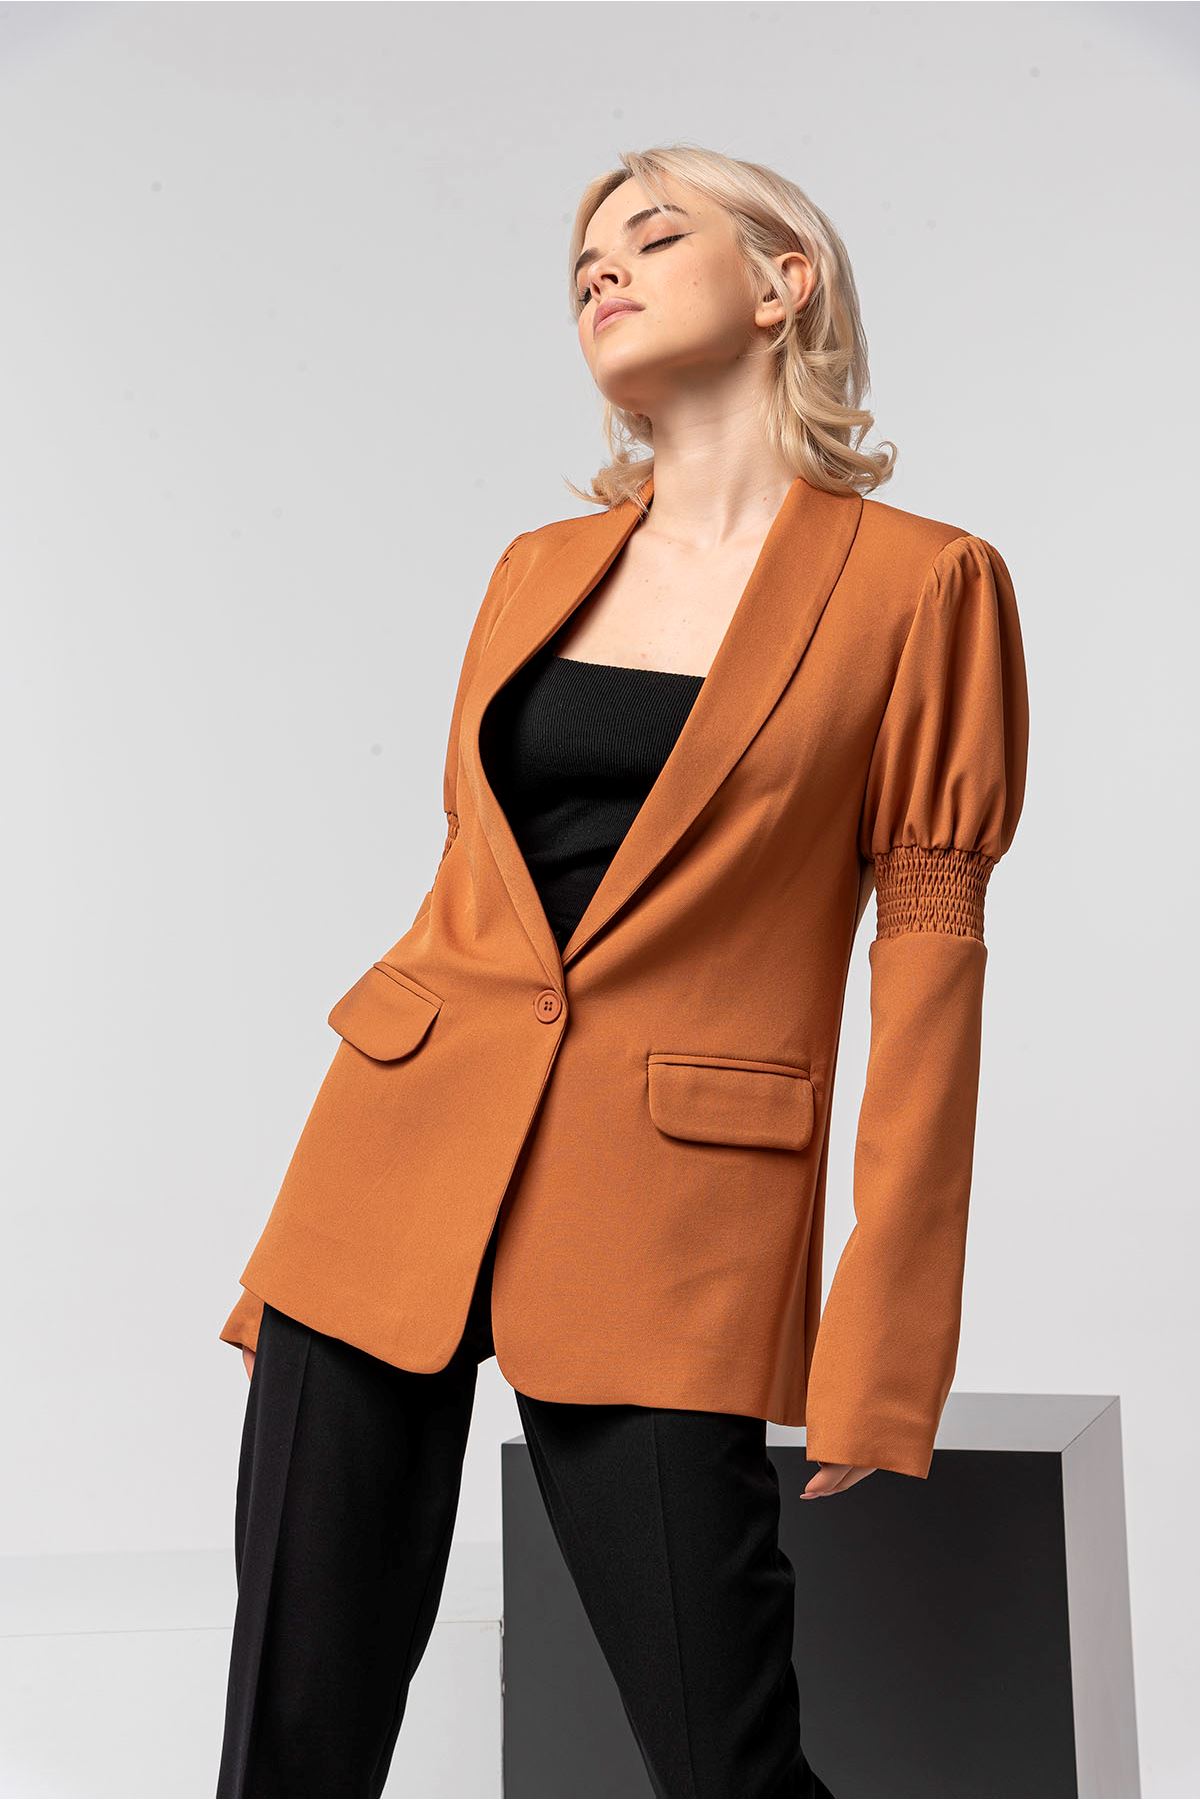 Licra Fabric Long Sleeve Revere Collar Hip Height Classical Women Jacket - Cinnamon 